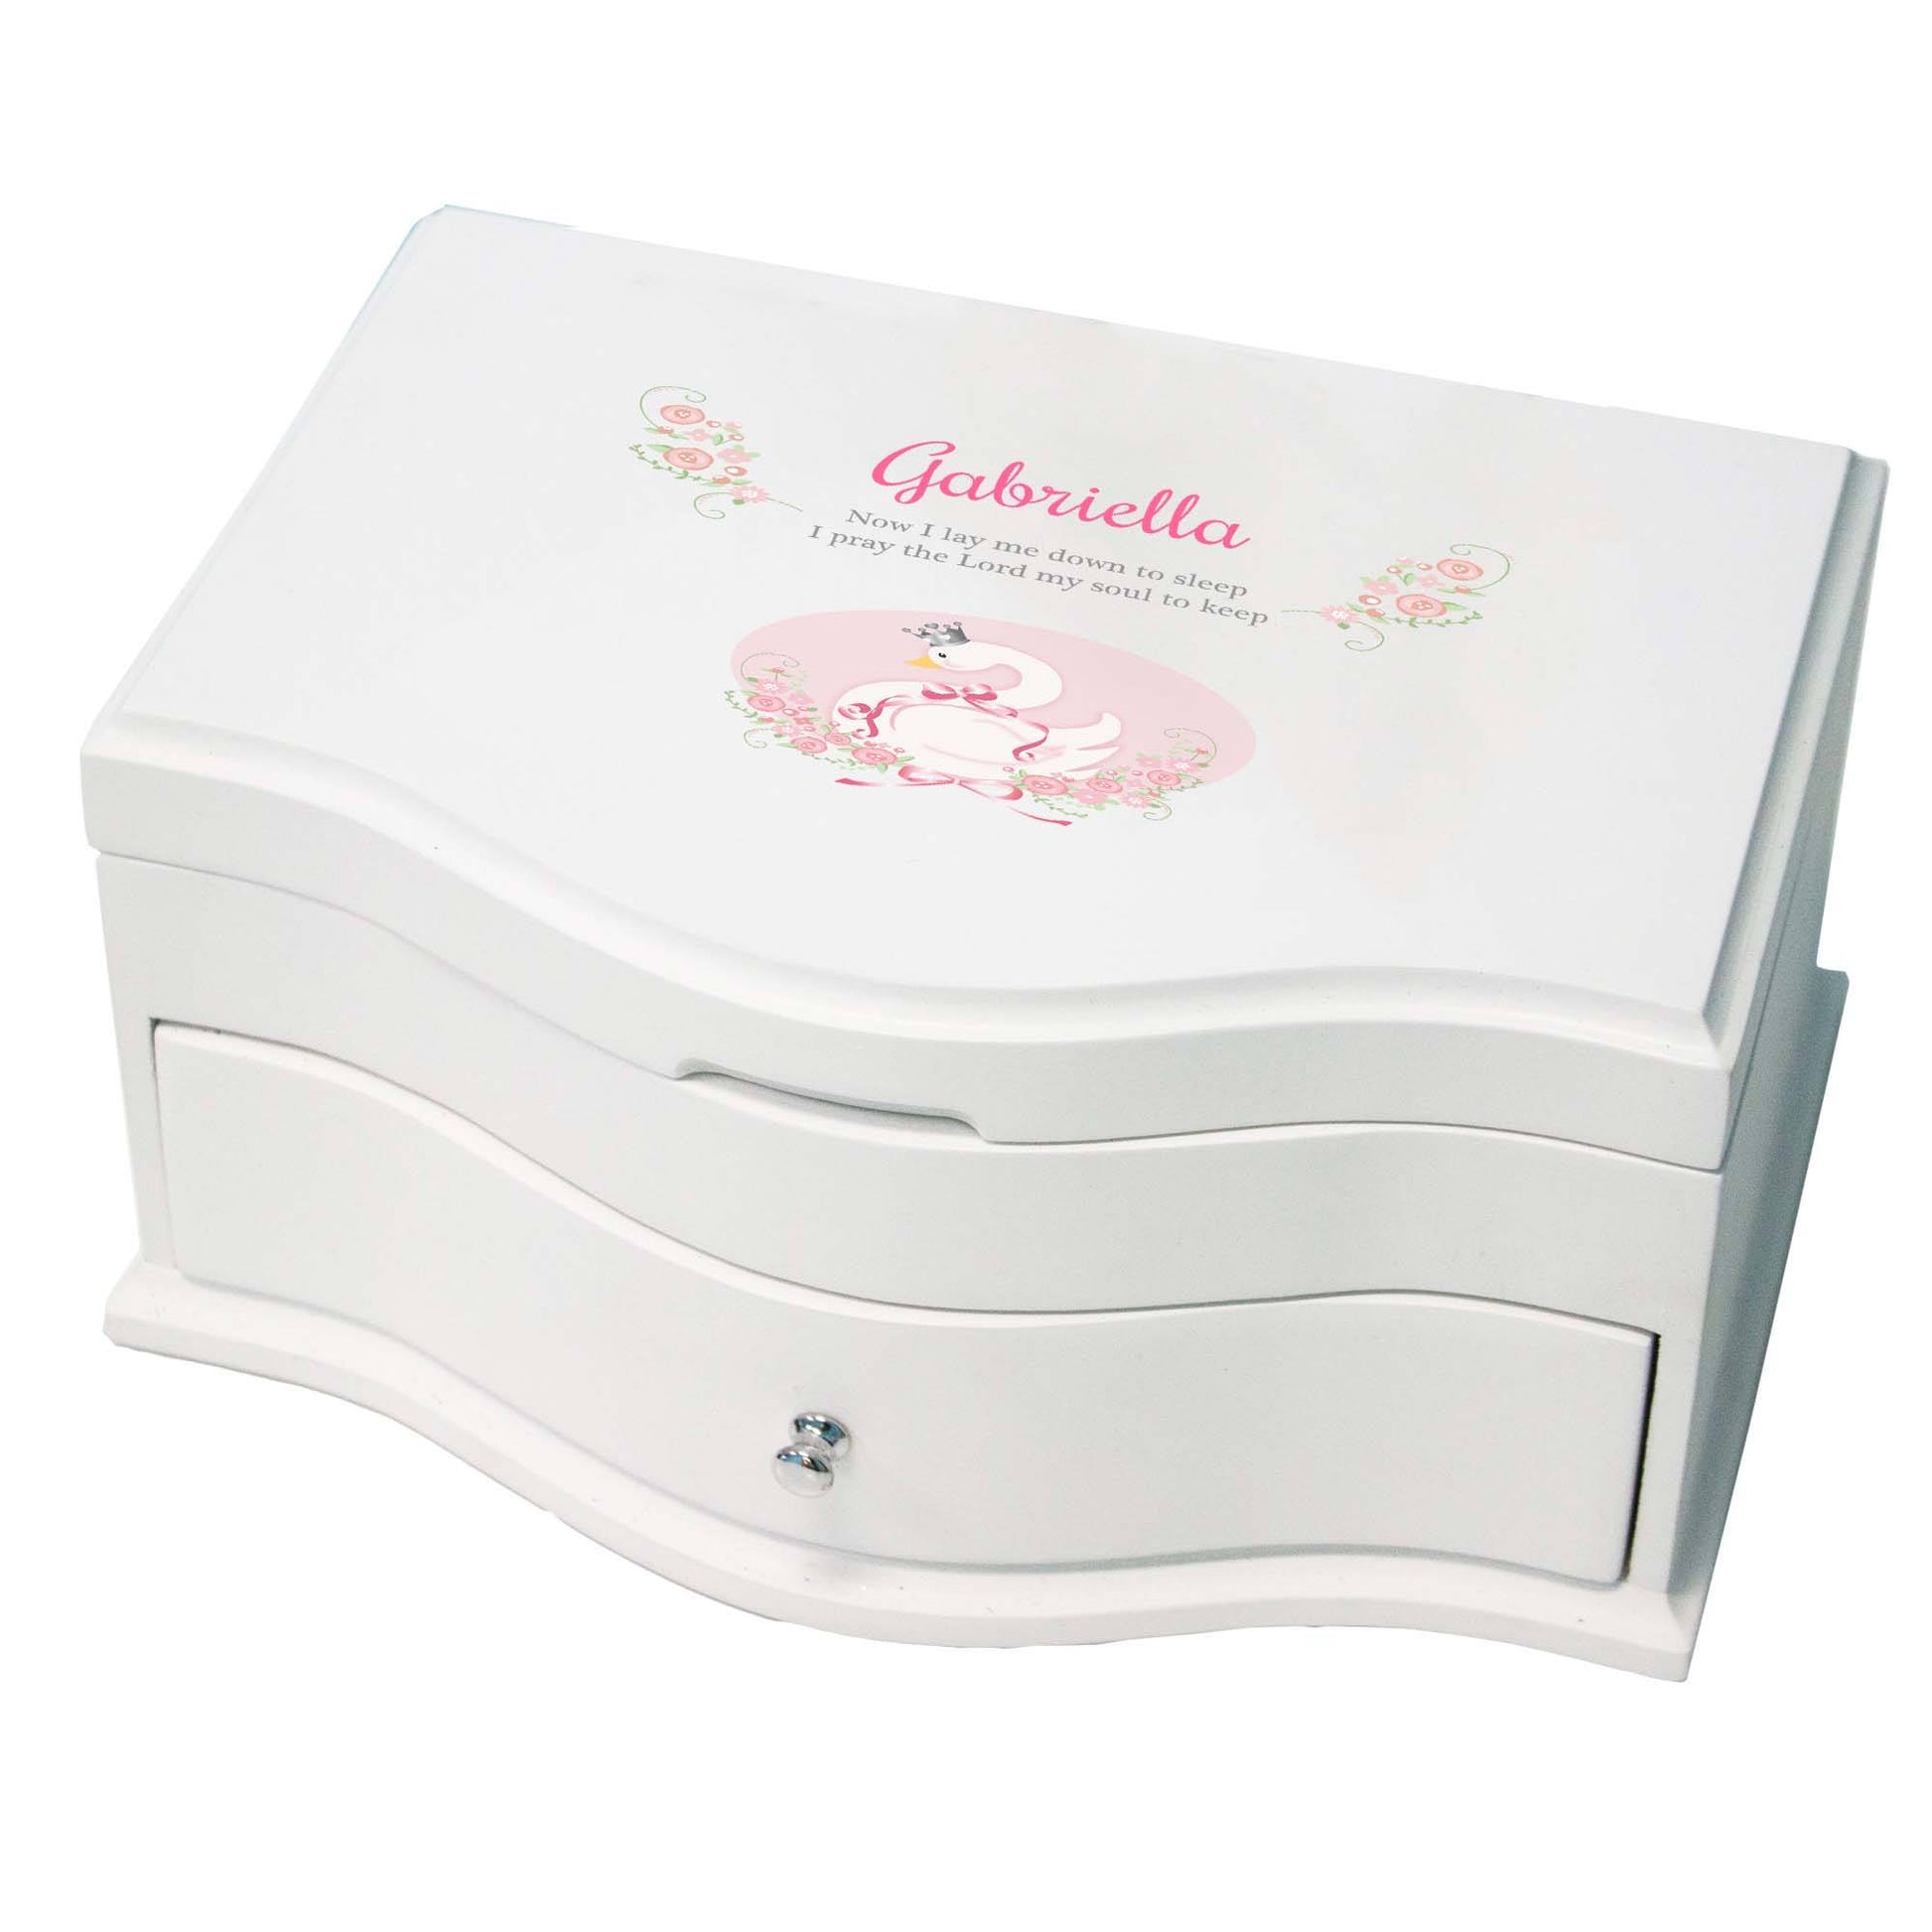 Princess Girls Jewelry Box with Swan design